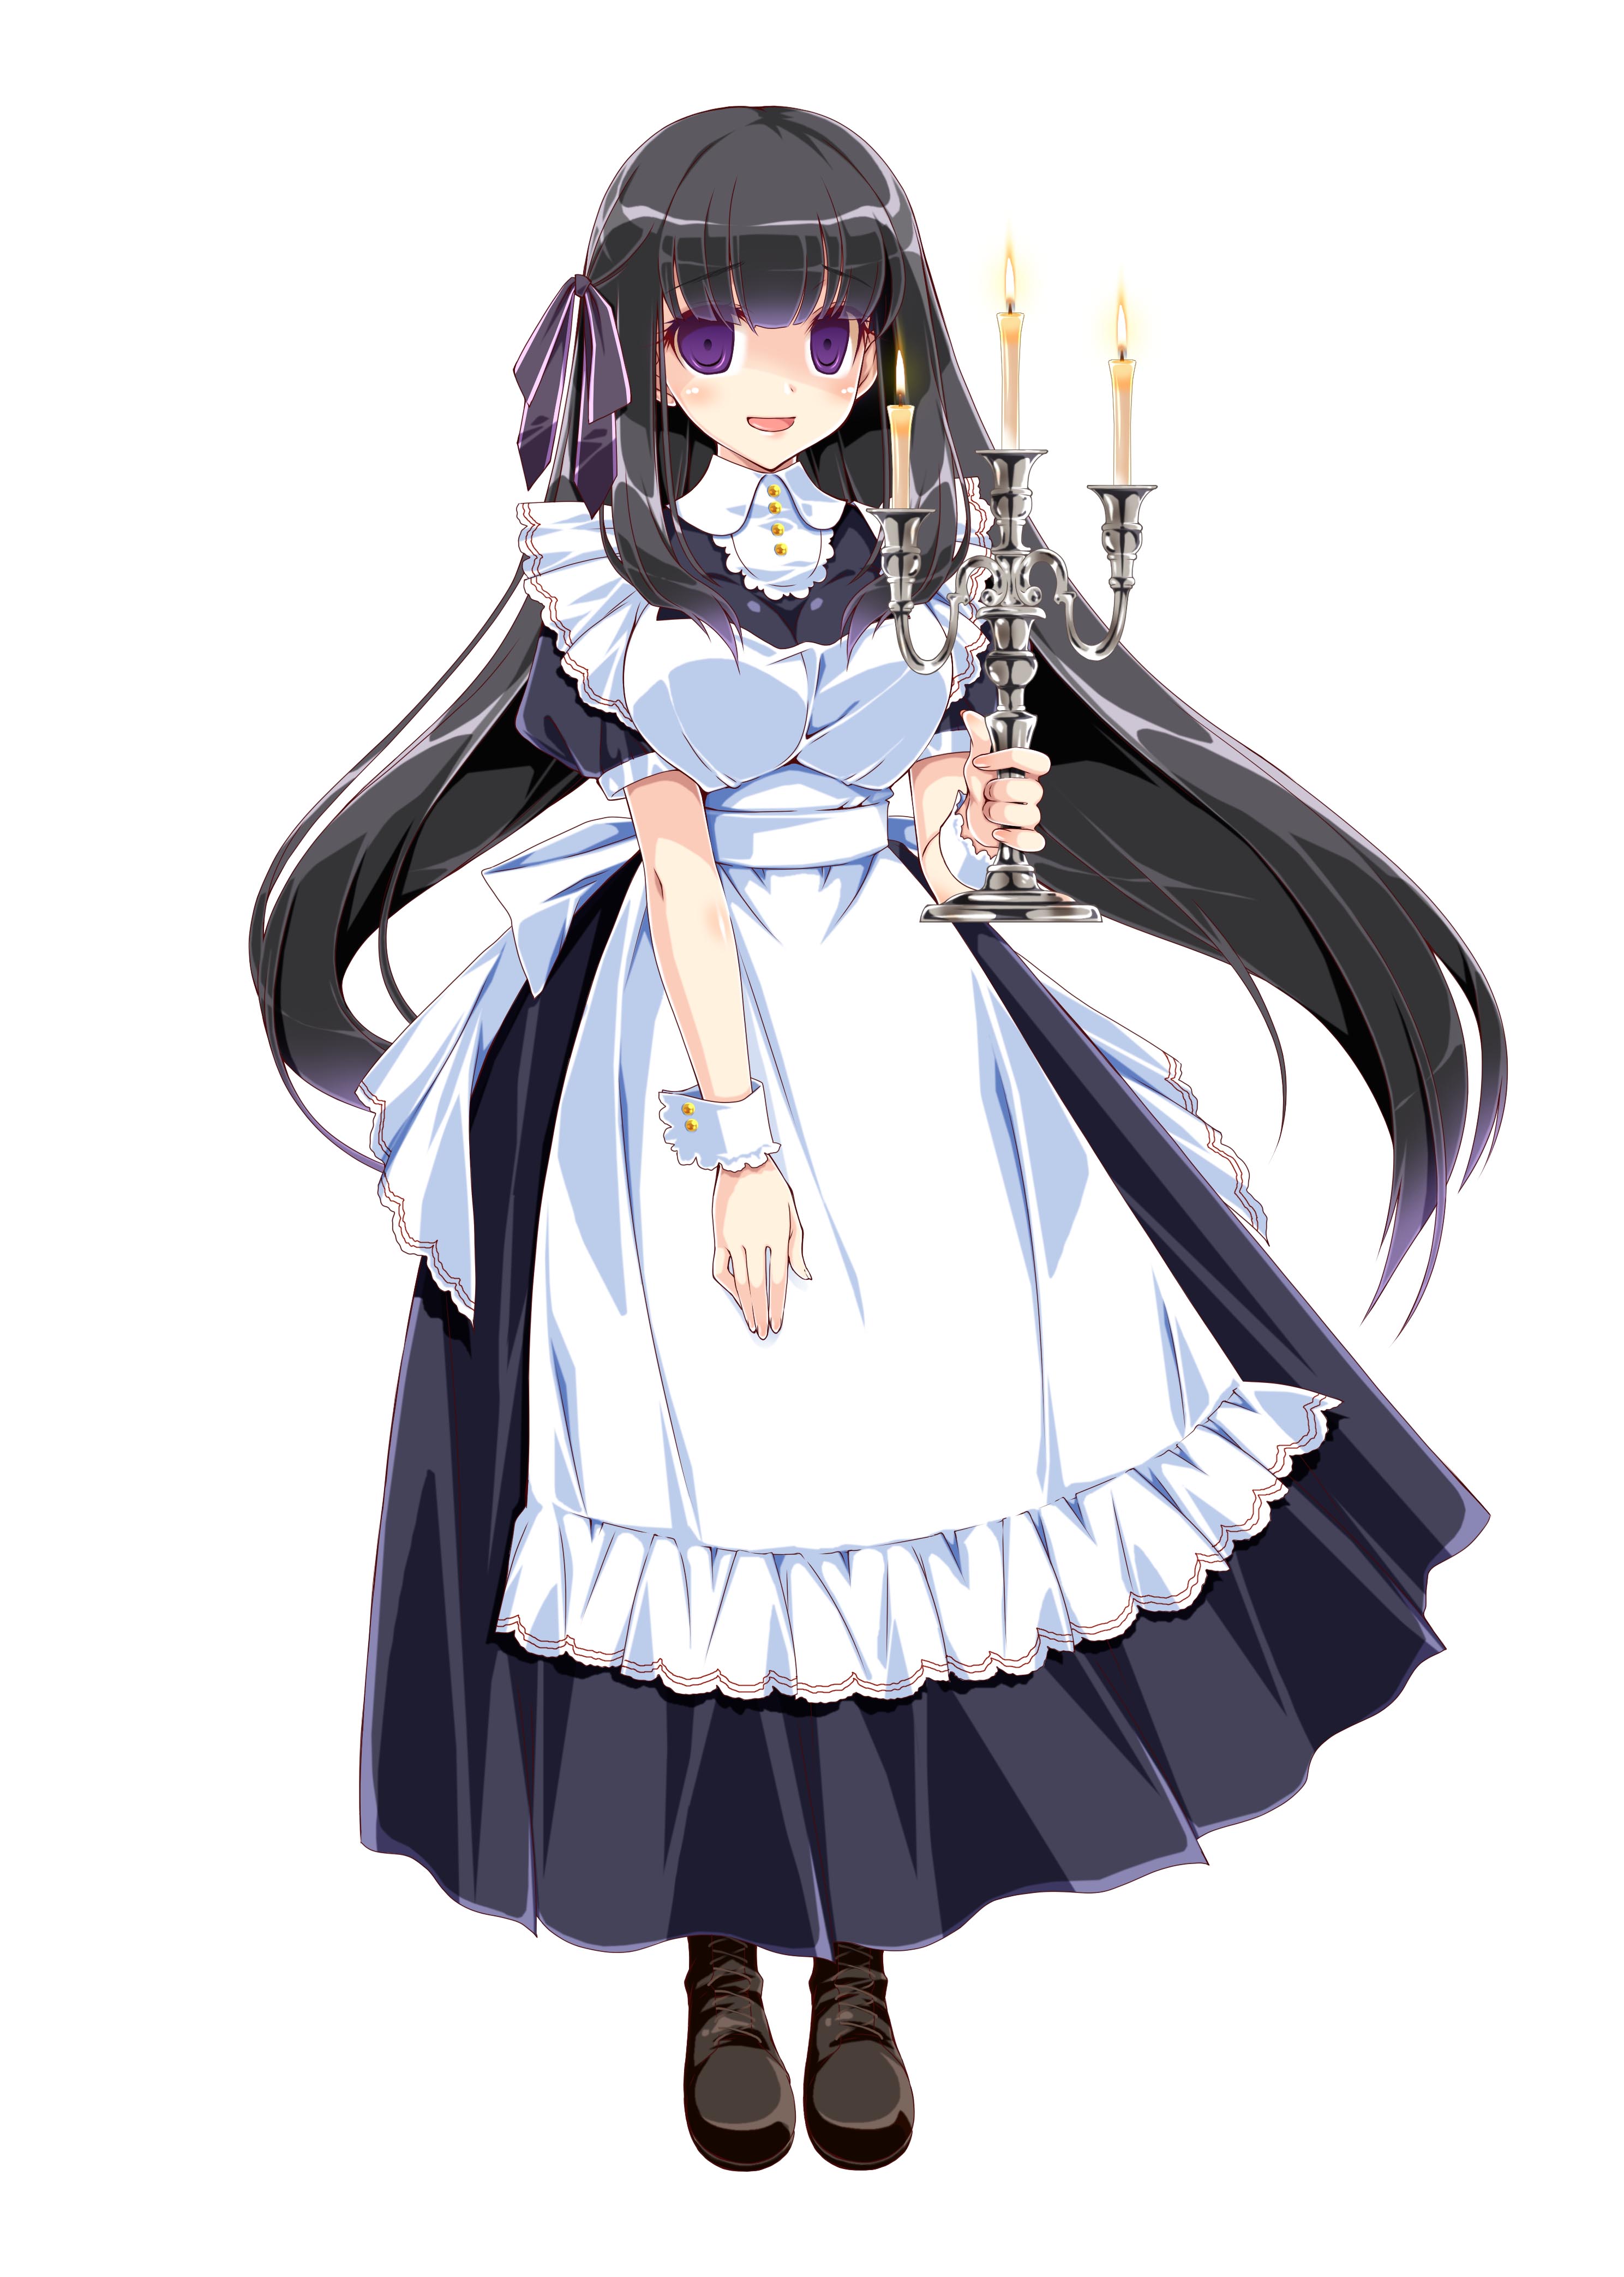 Clumsy Maid [Original] : r/animemaids